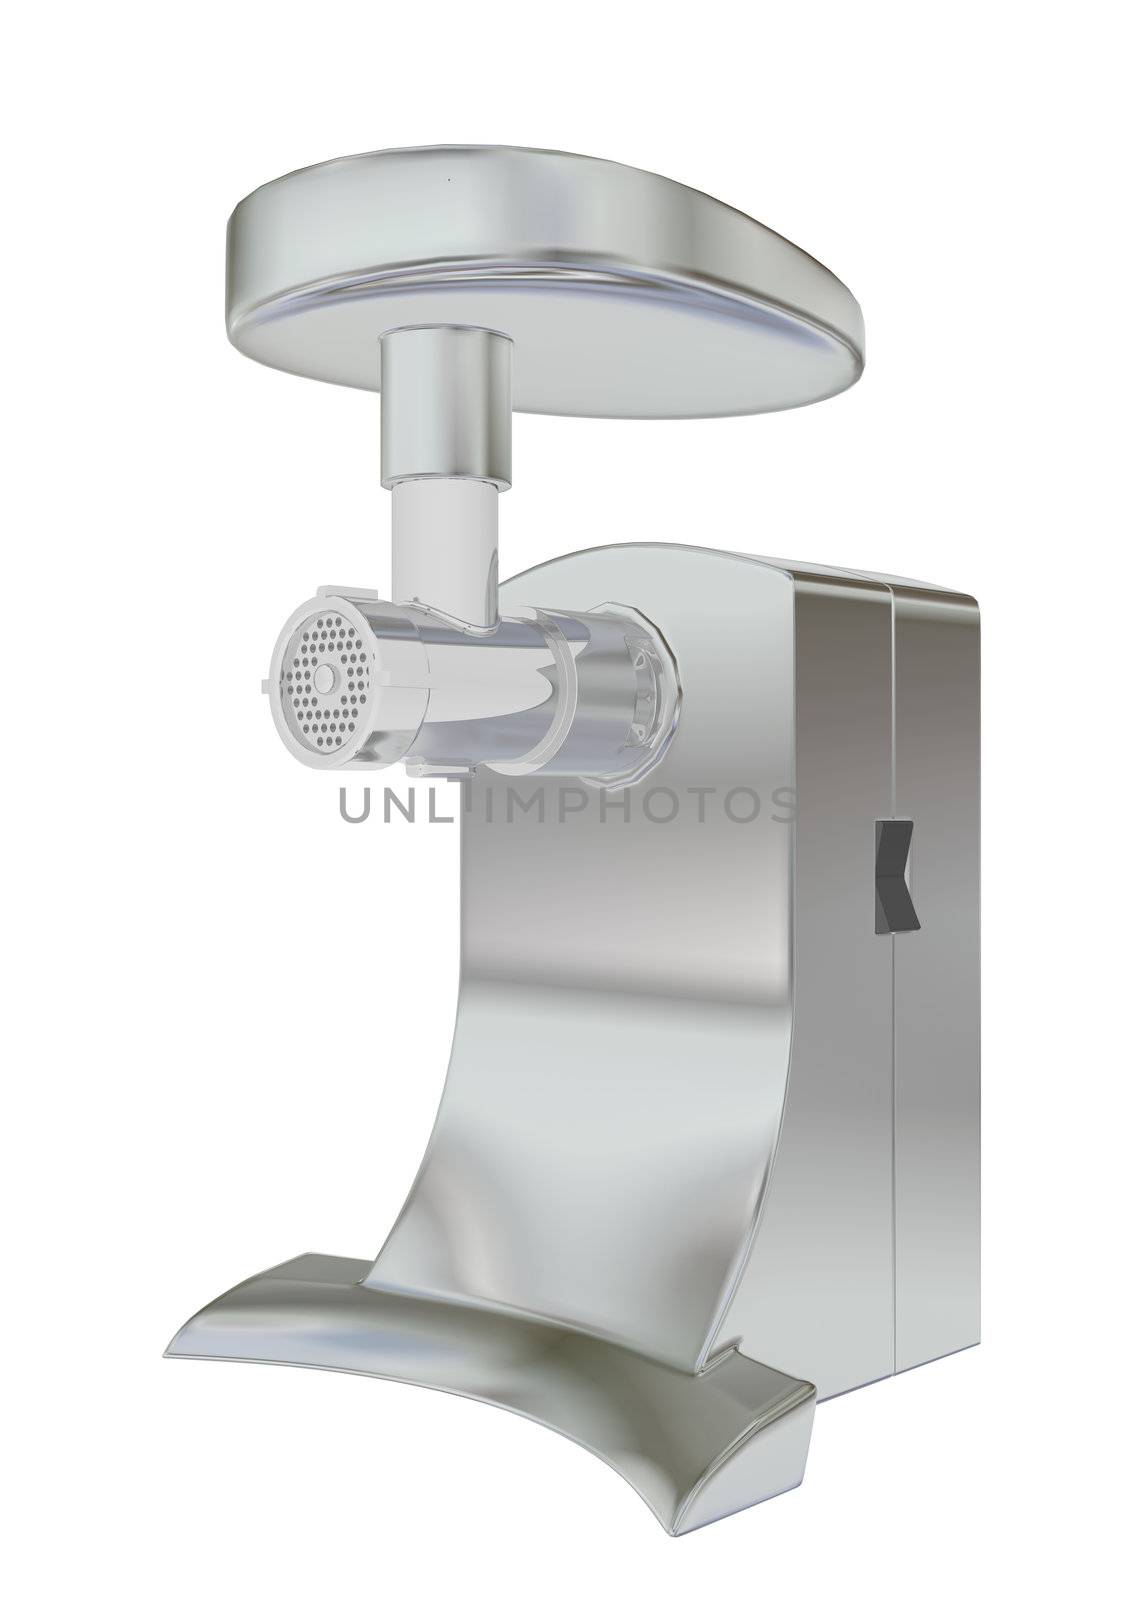 Stainless steel meat grinder, 3D illustration by Morphart